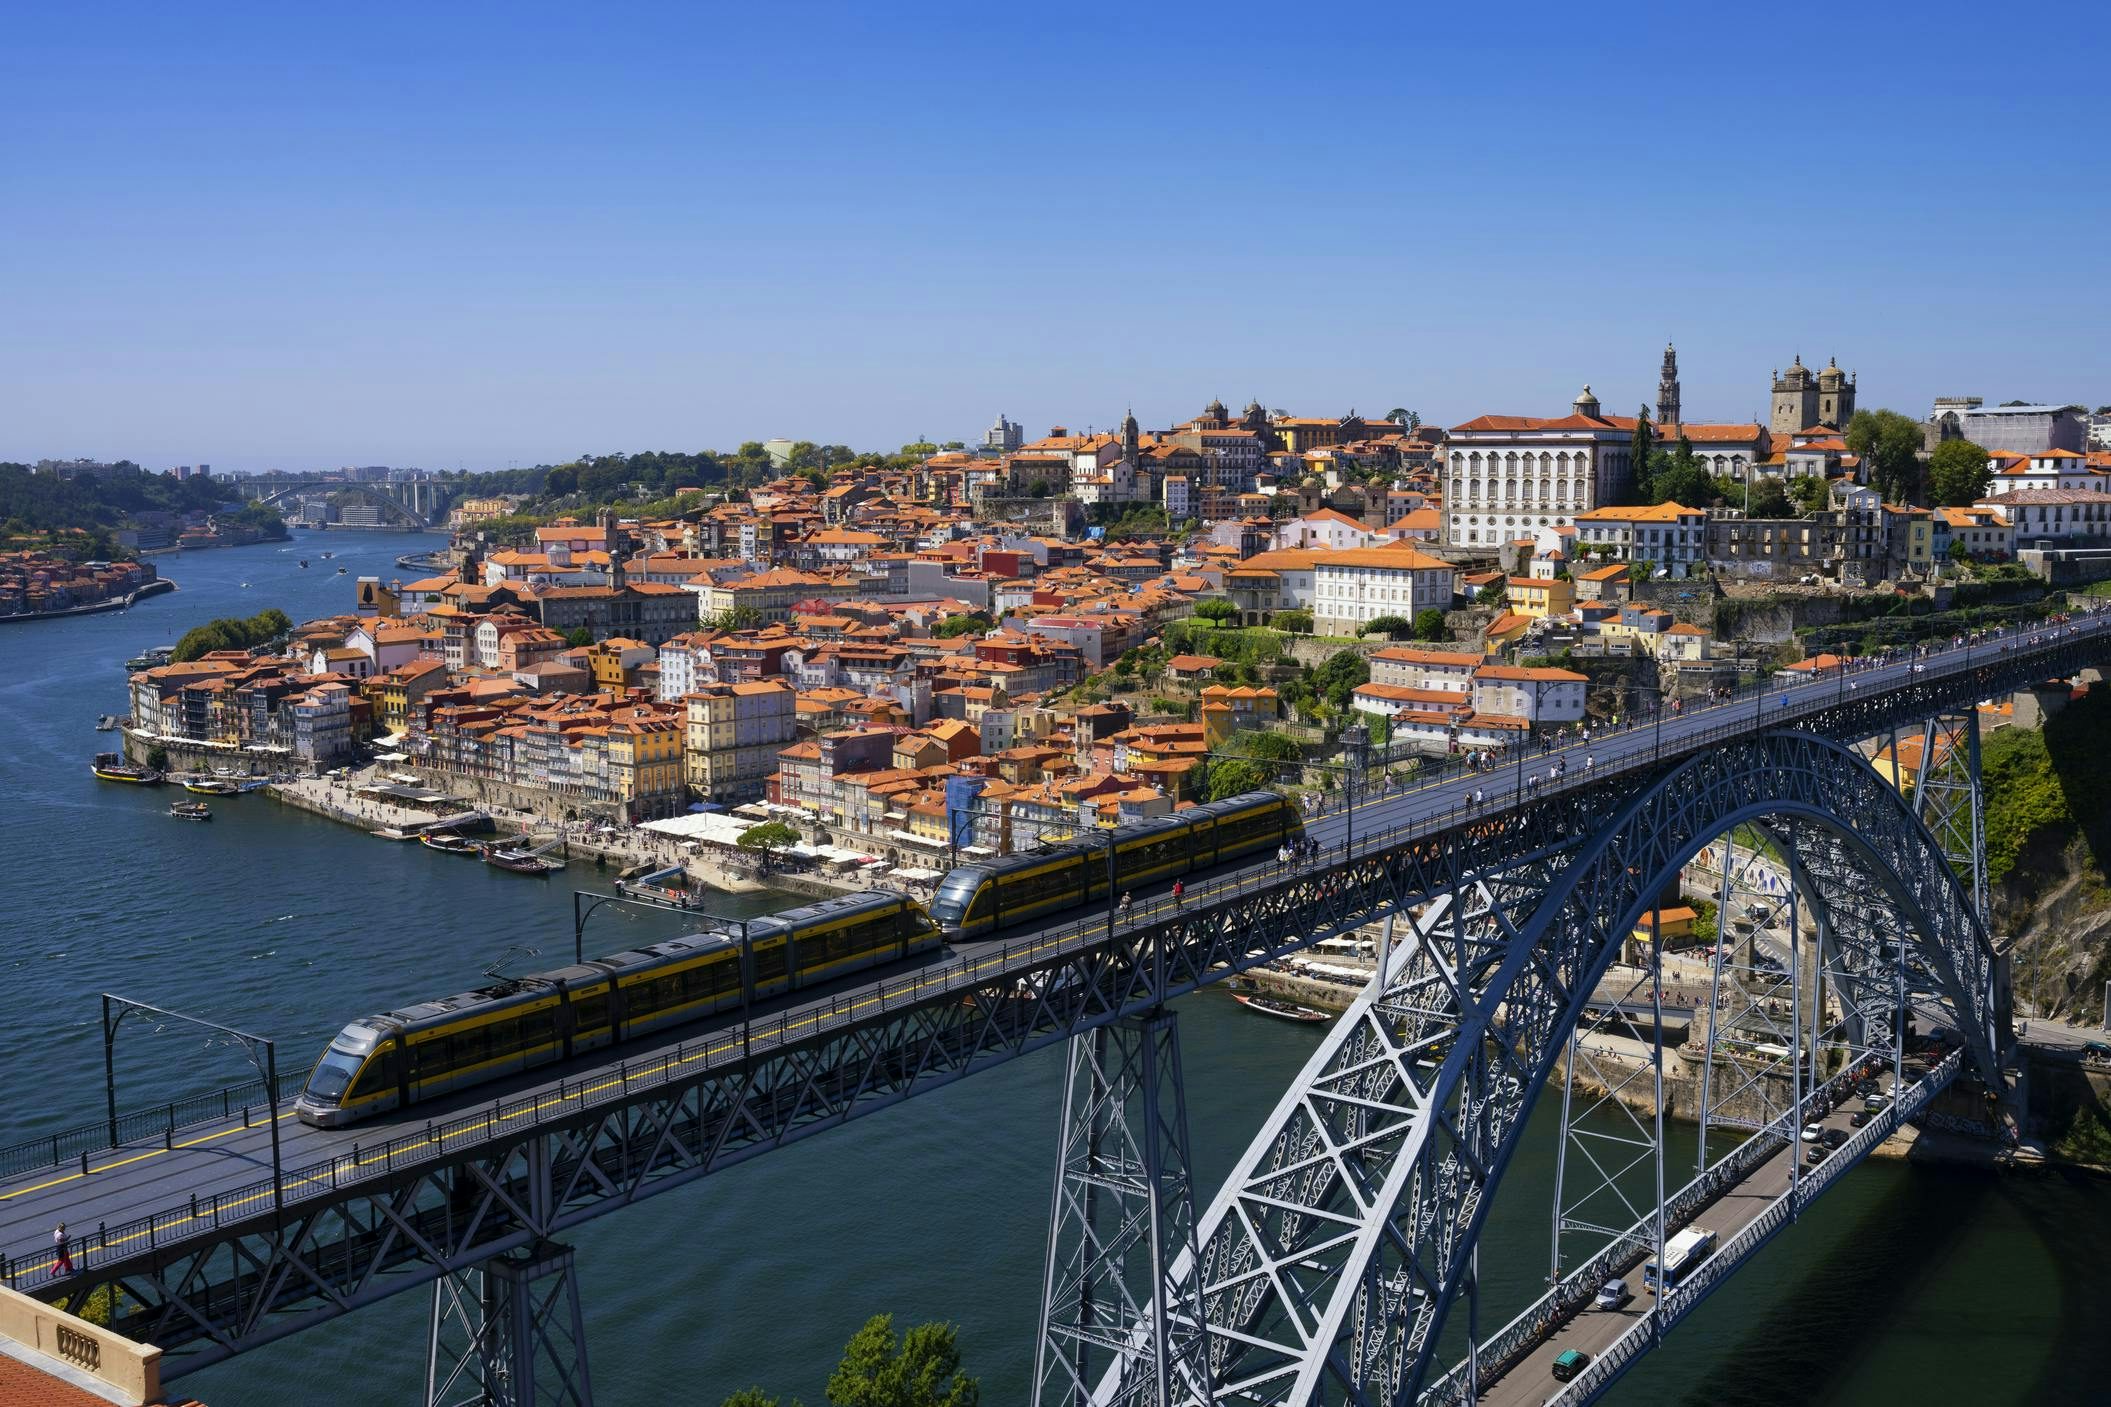 aerial view of dom luiz bridge, over the Douro river in porto, with a train on the upper deck of the bridge